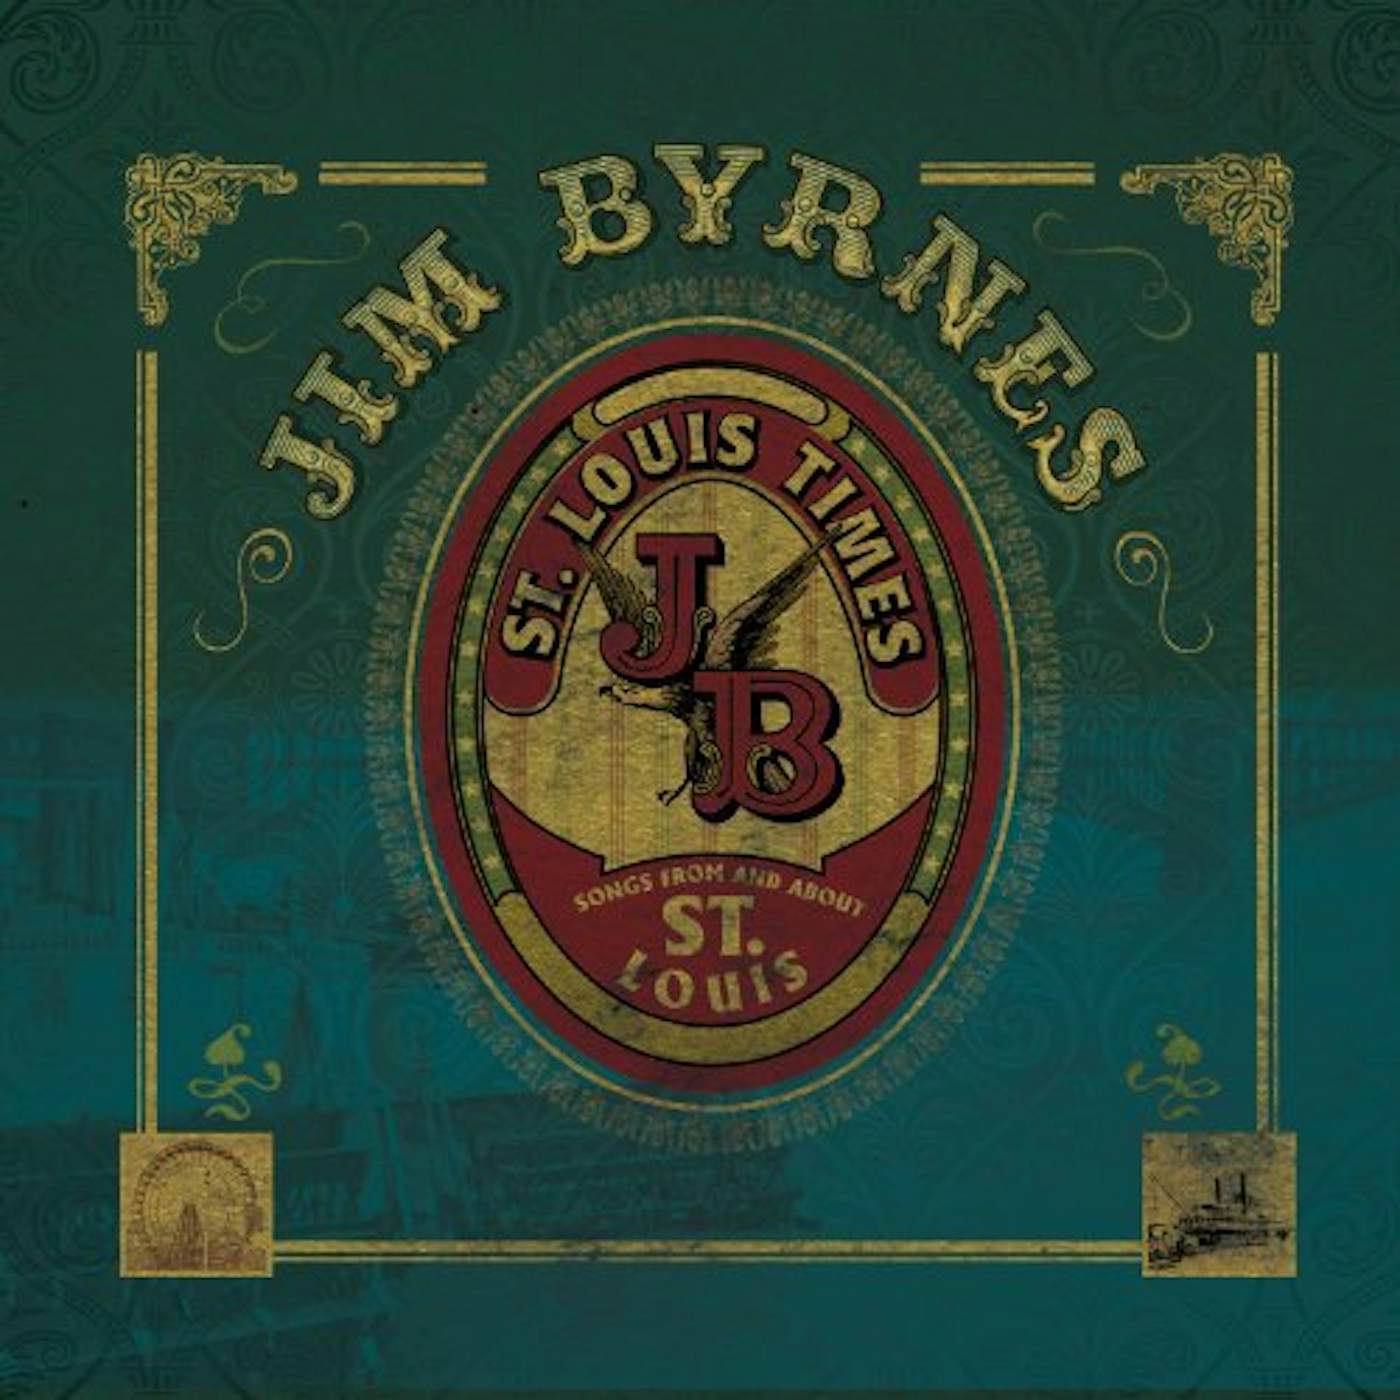 Jim Byrnes ST LOUIS TIMES Vinyl Record